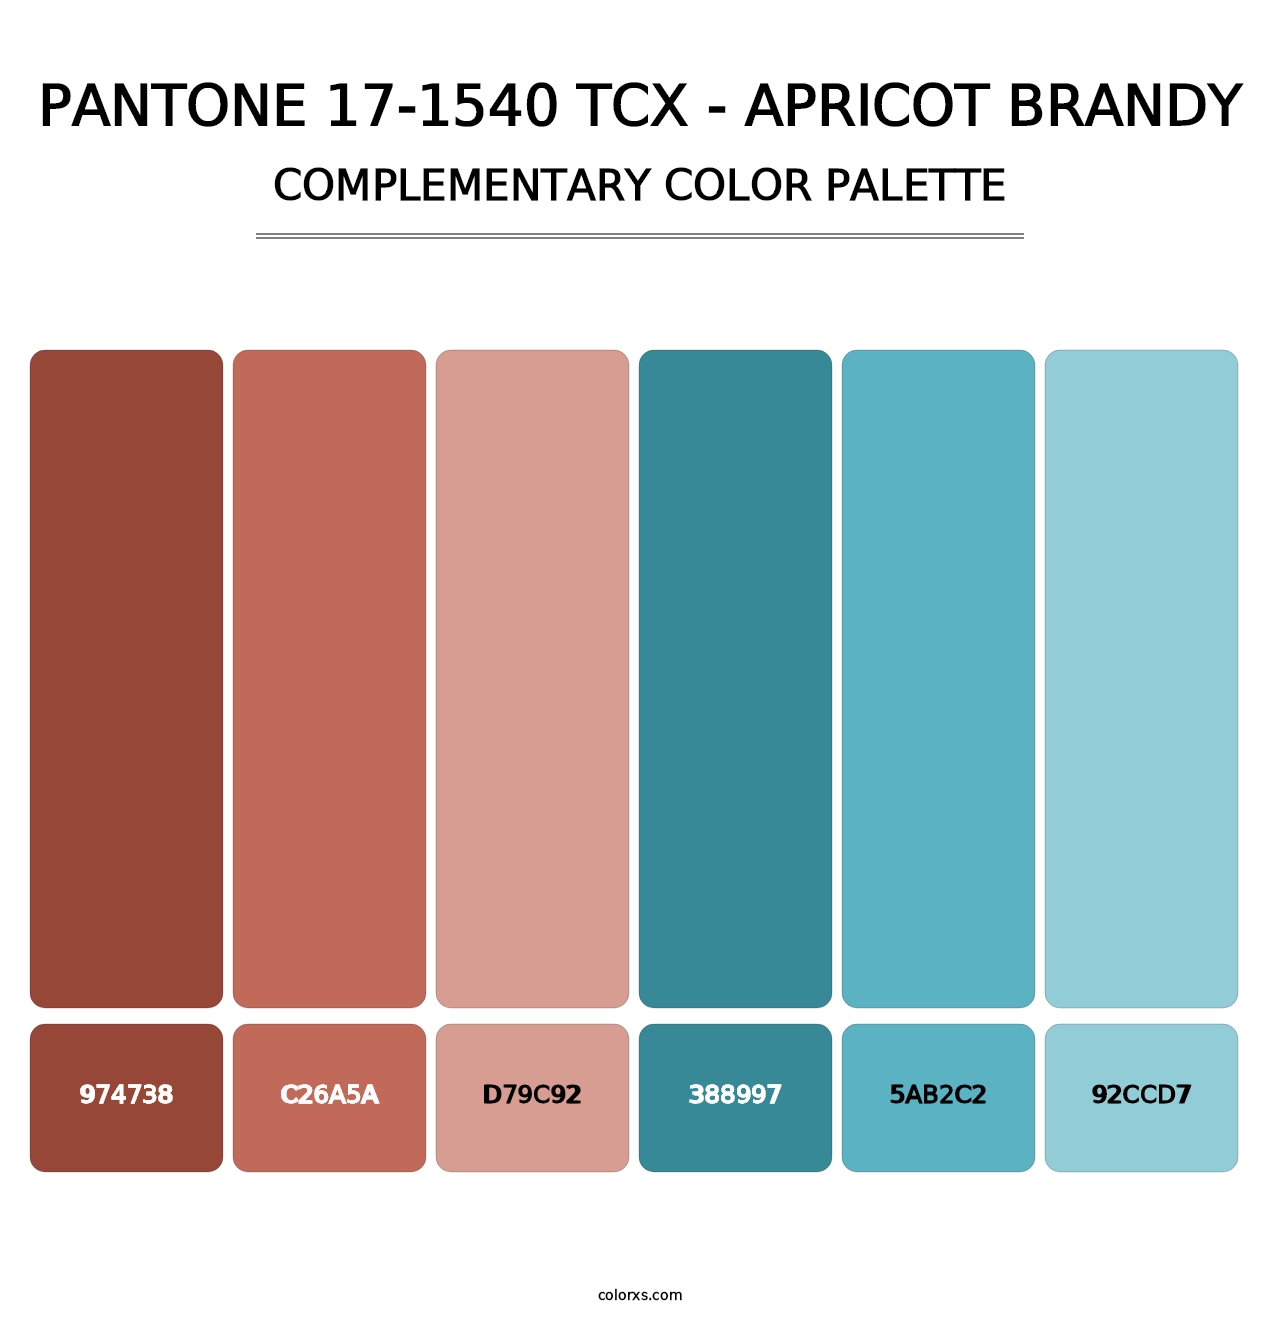 PANTONE 17-1540 TCX - Apricot Brandy - Complementary Color Palette